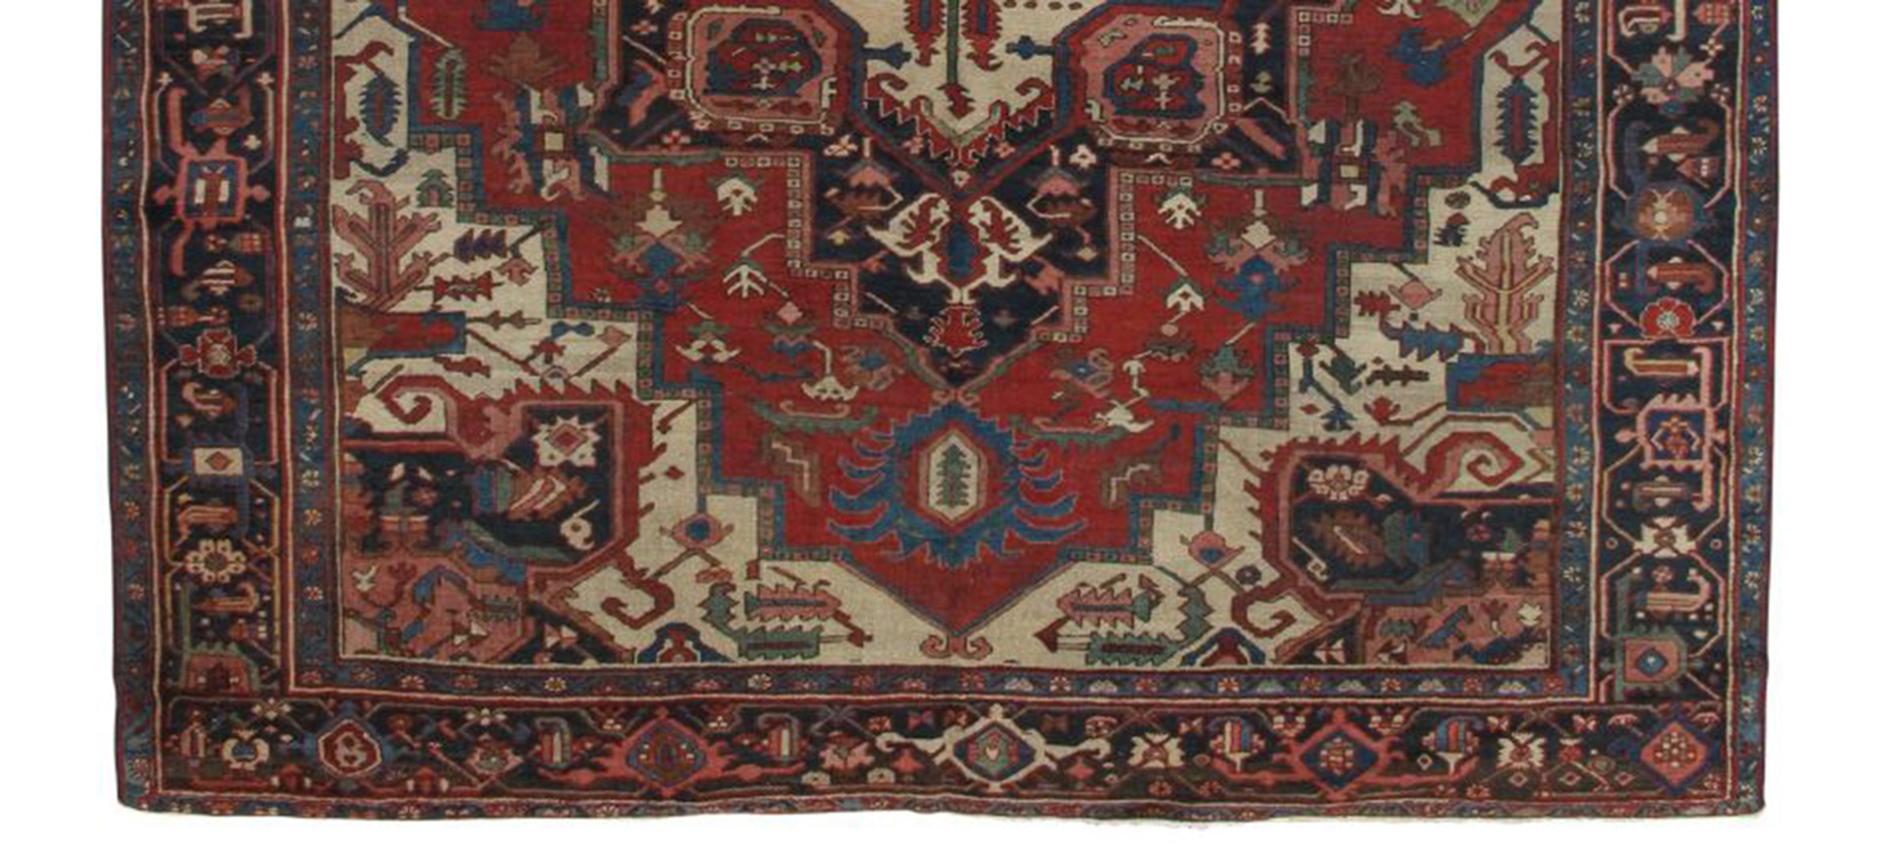 19th Century Antique Handsome Serapi Carpet, Handmade Wool Carpet Red Navy, Light Blue, Ivory For Sale